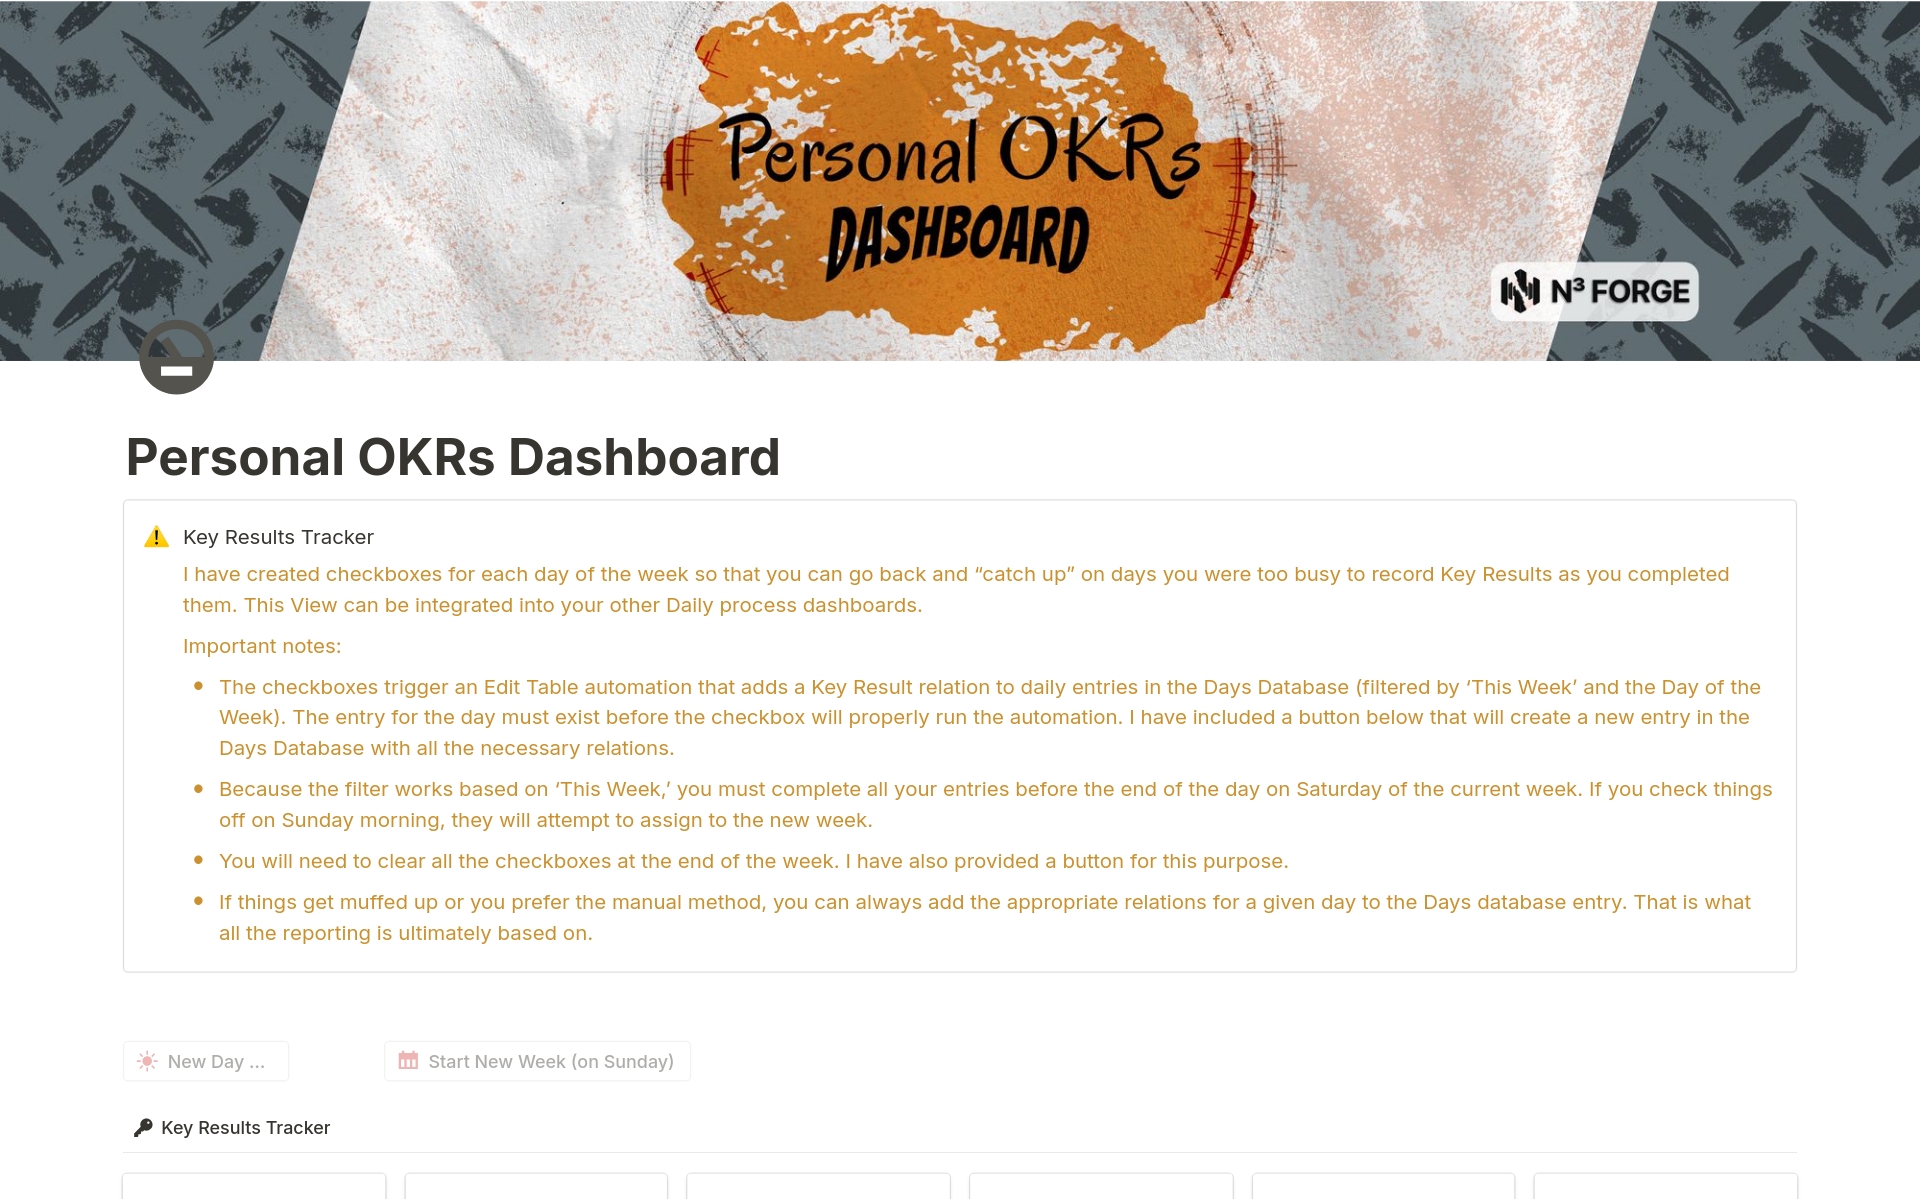 Vista previa de una plantilla para Personal OKRs Dashboard